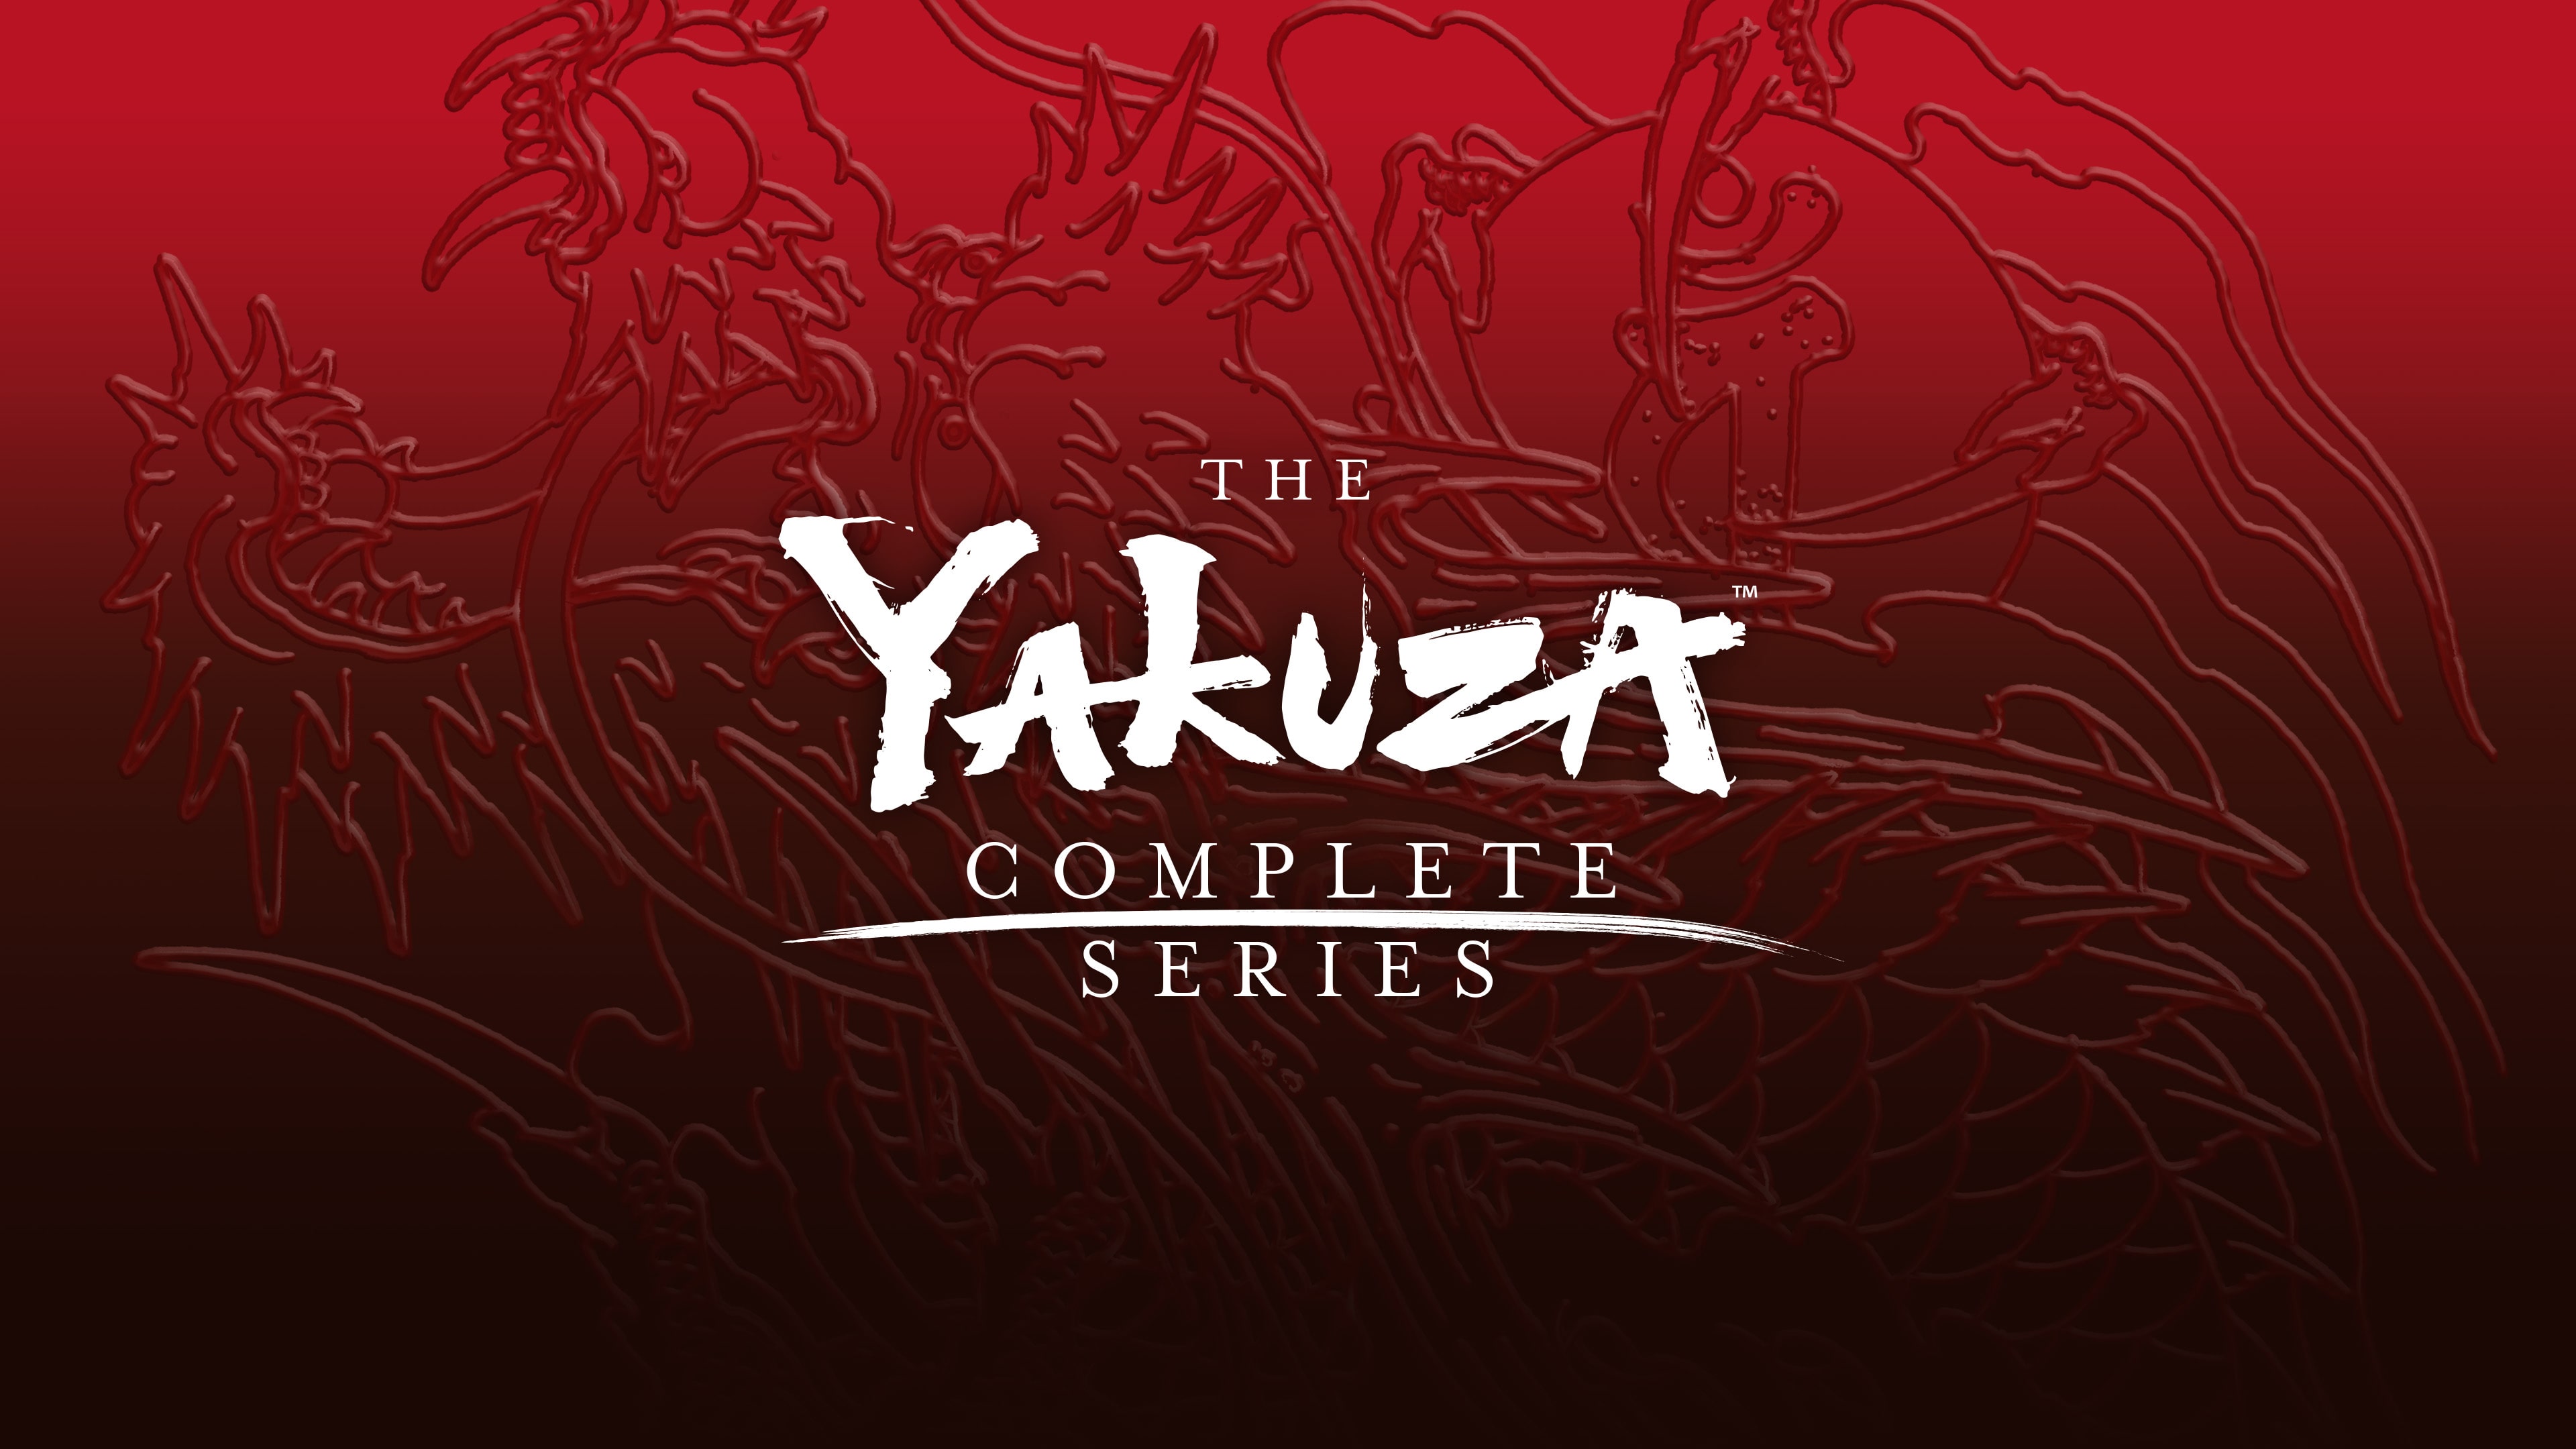 Serie completa di Yakuza